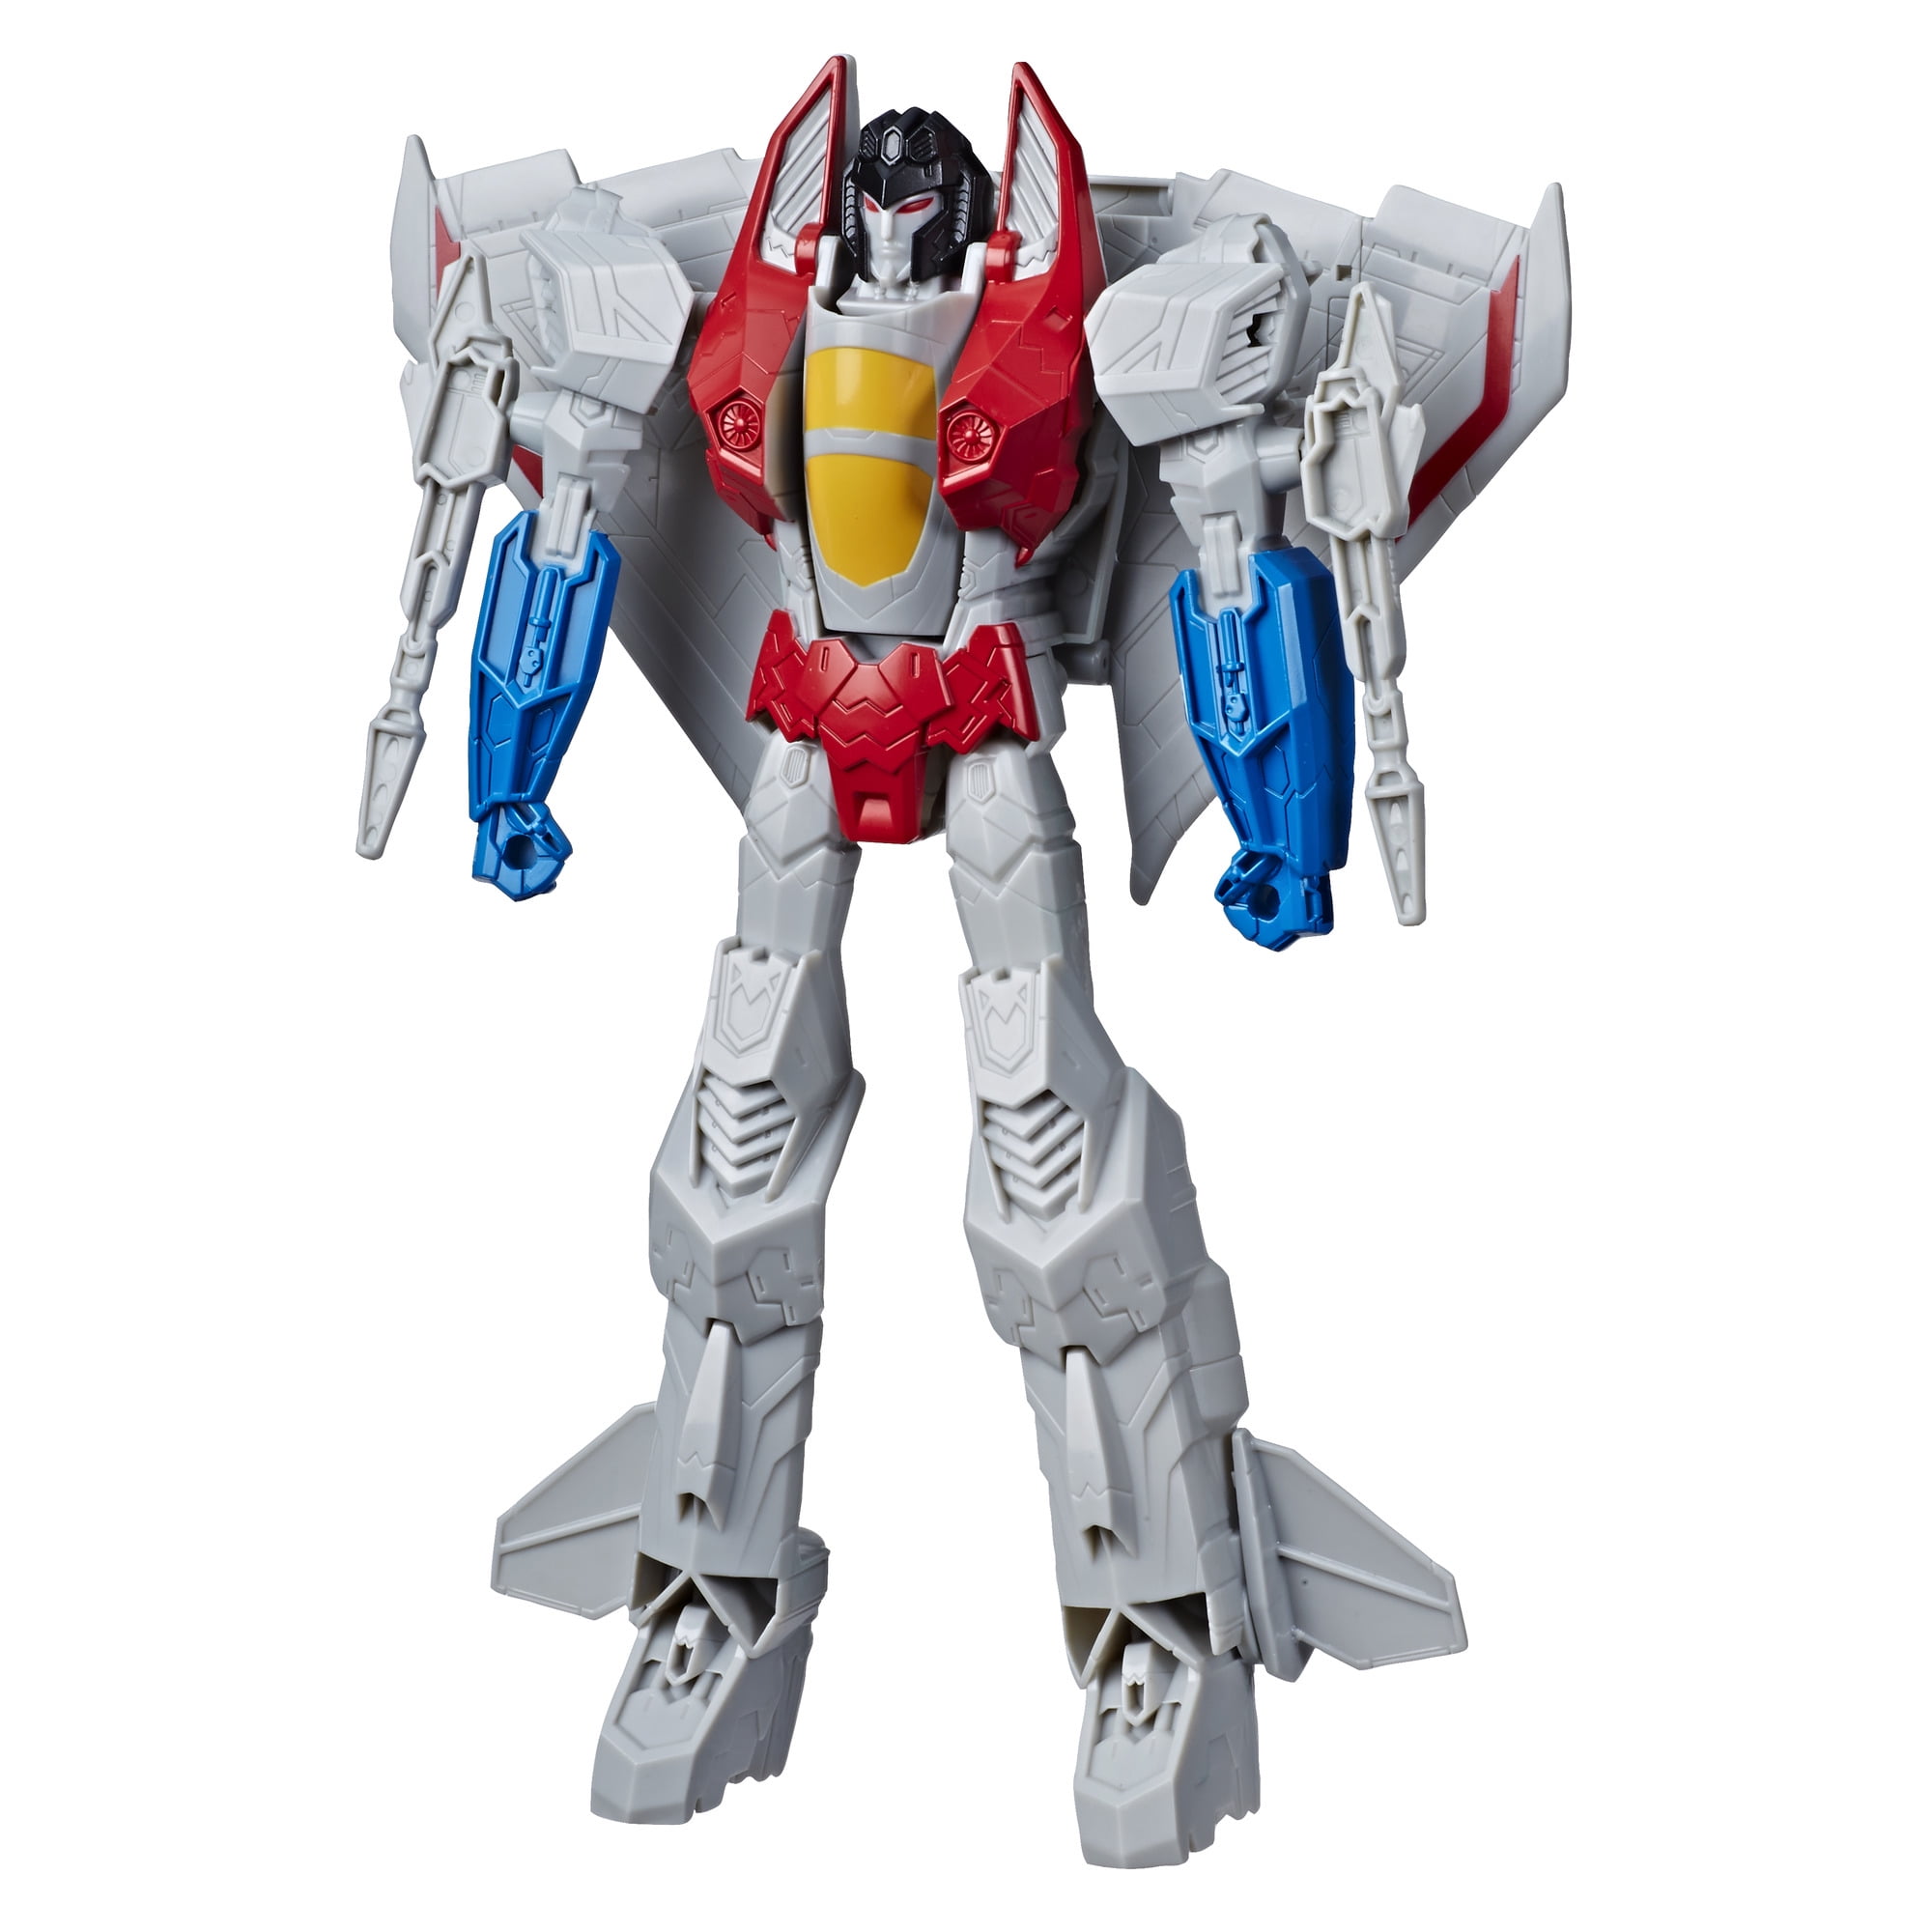 11 Inch Transformers TITAN Changers Grimlock Action Figure Hasbro for sale online 